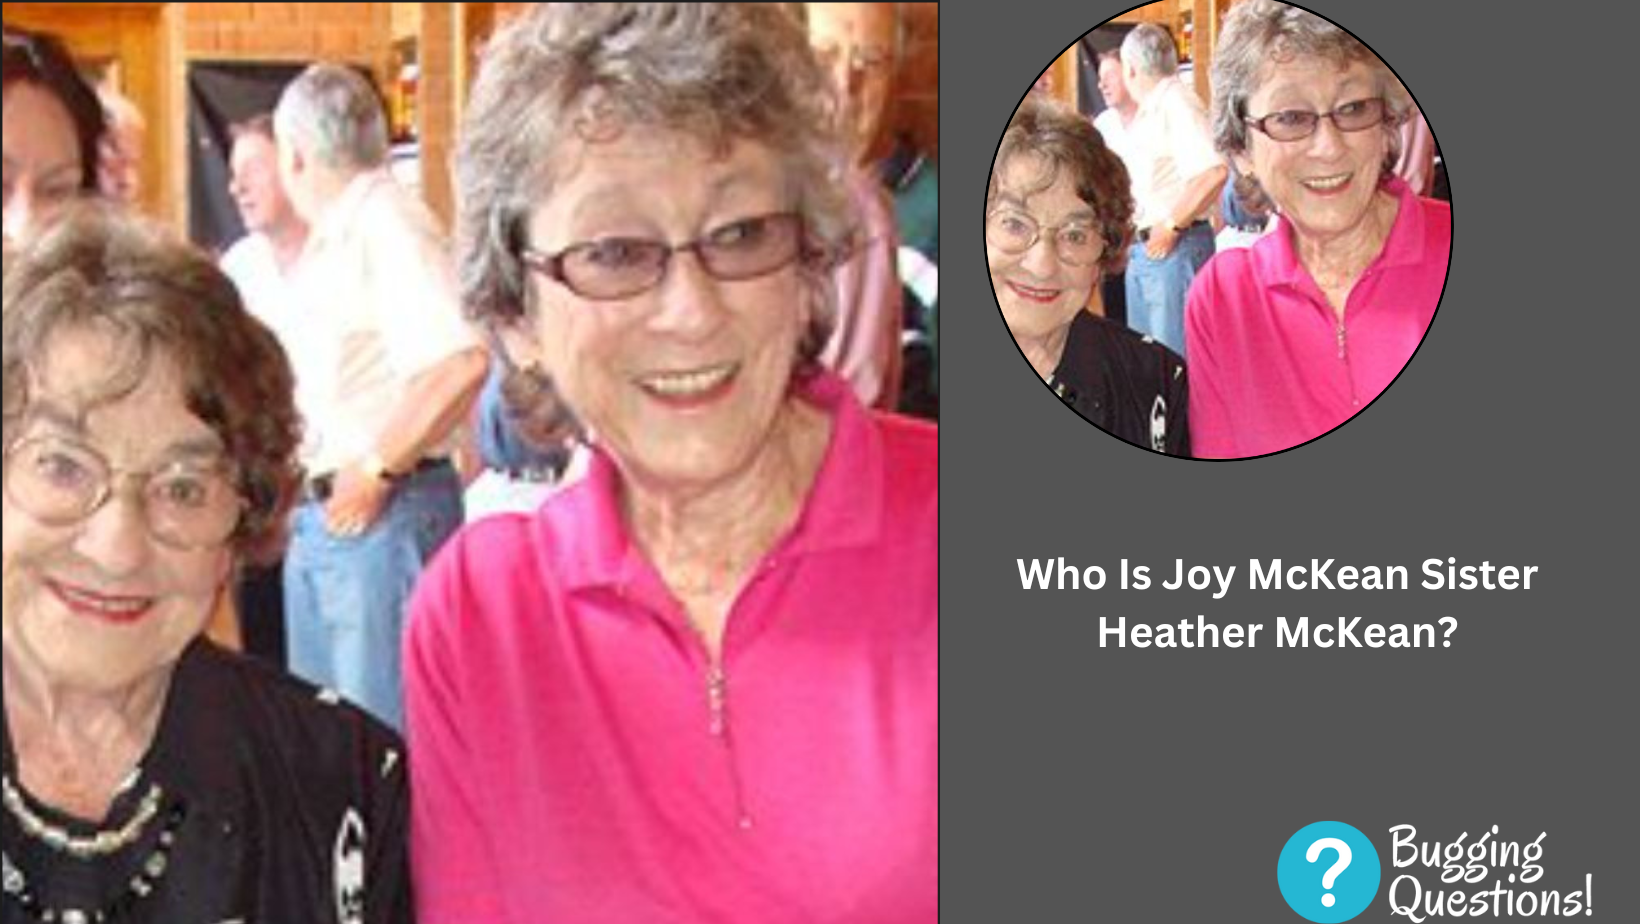 Who Is Joy McKean Sister Heather McKean?